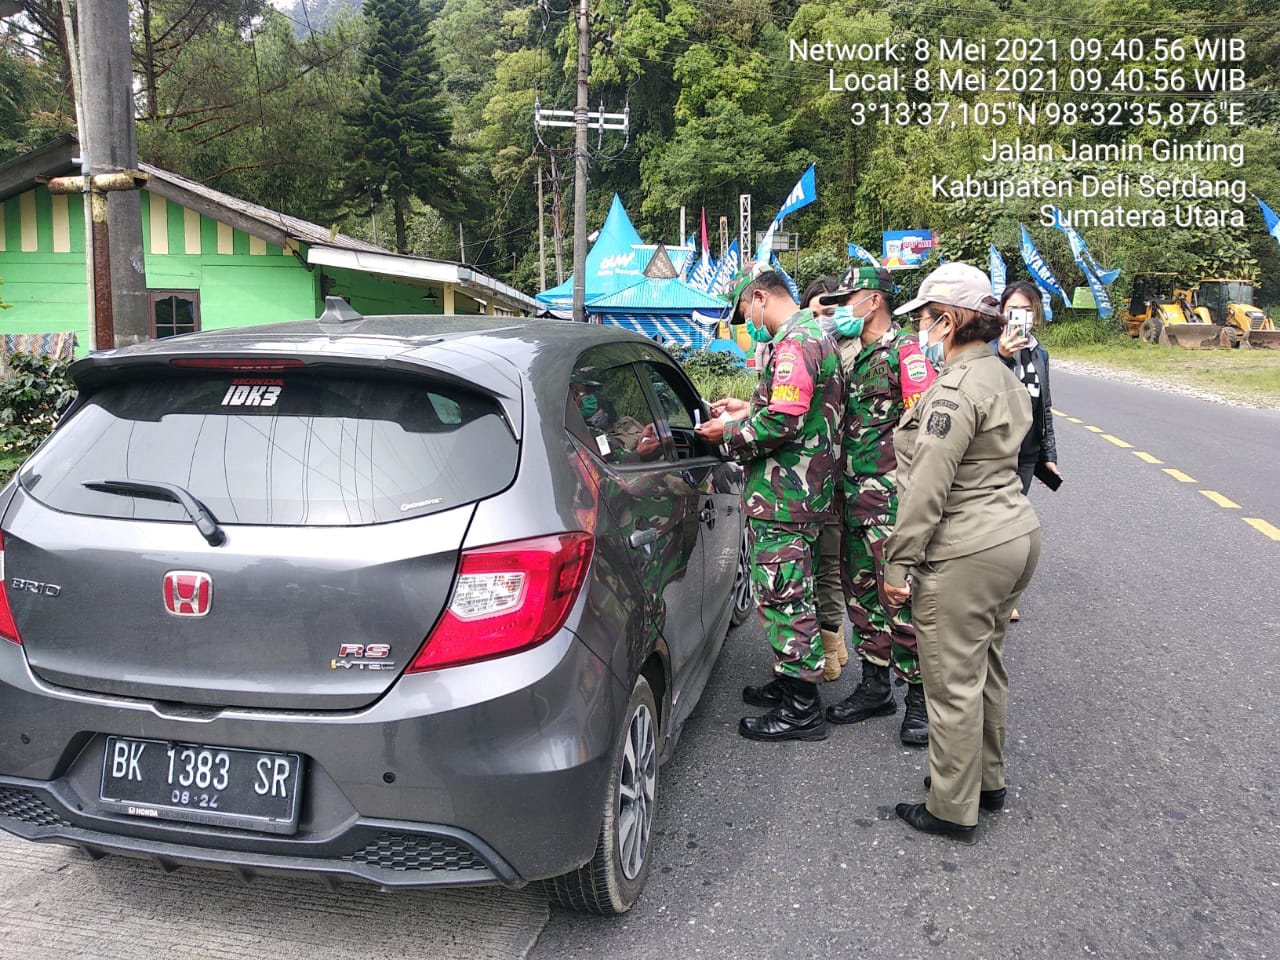 TNI – Polri Siap Amankan Mudik Lebaran Di Pos Pengamanan Ops Ketupat Toba 2021